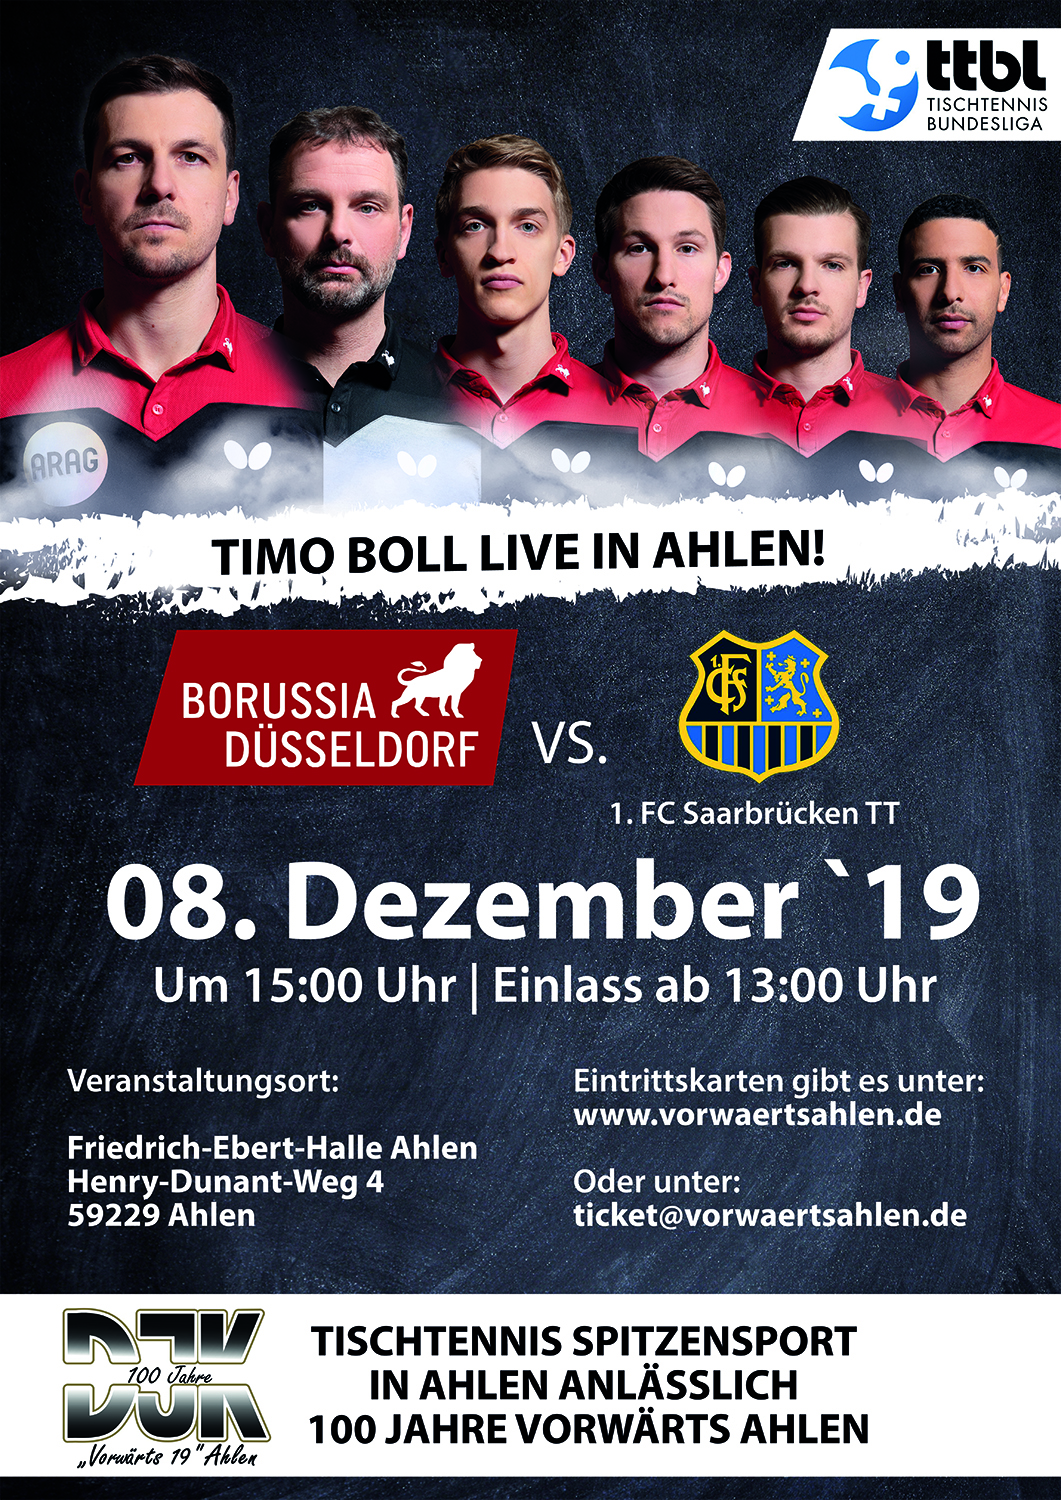 Borussia Düsseldorf TTBL Borussia empfängt Saarbrücken in Ahlen